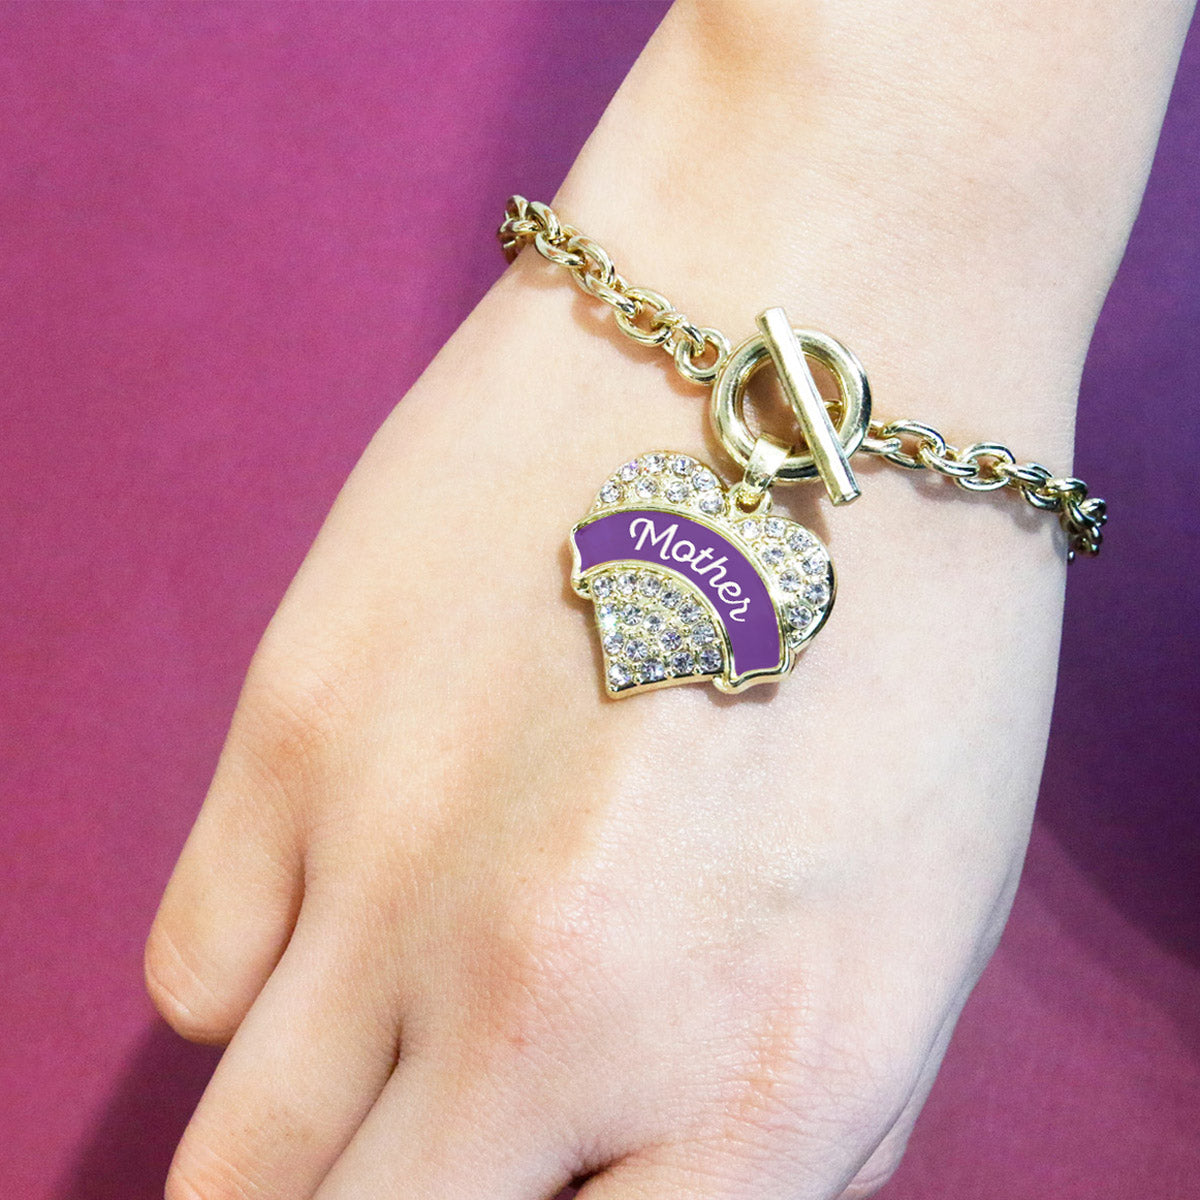 Gold Purple Mother Pave Heart Charm Toggle Bracelet